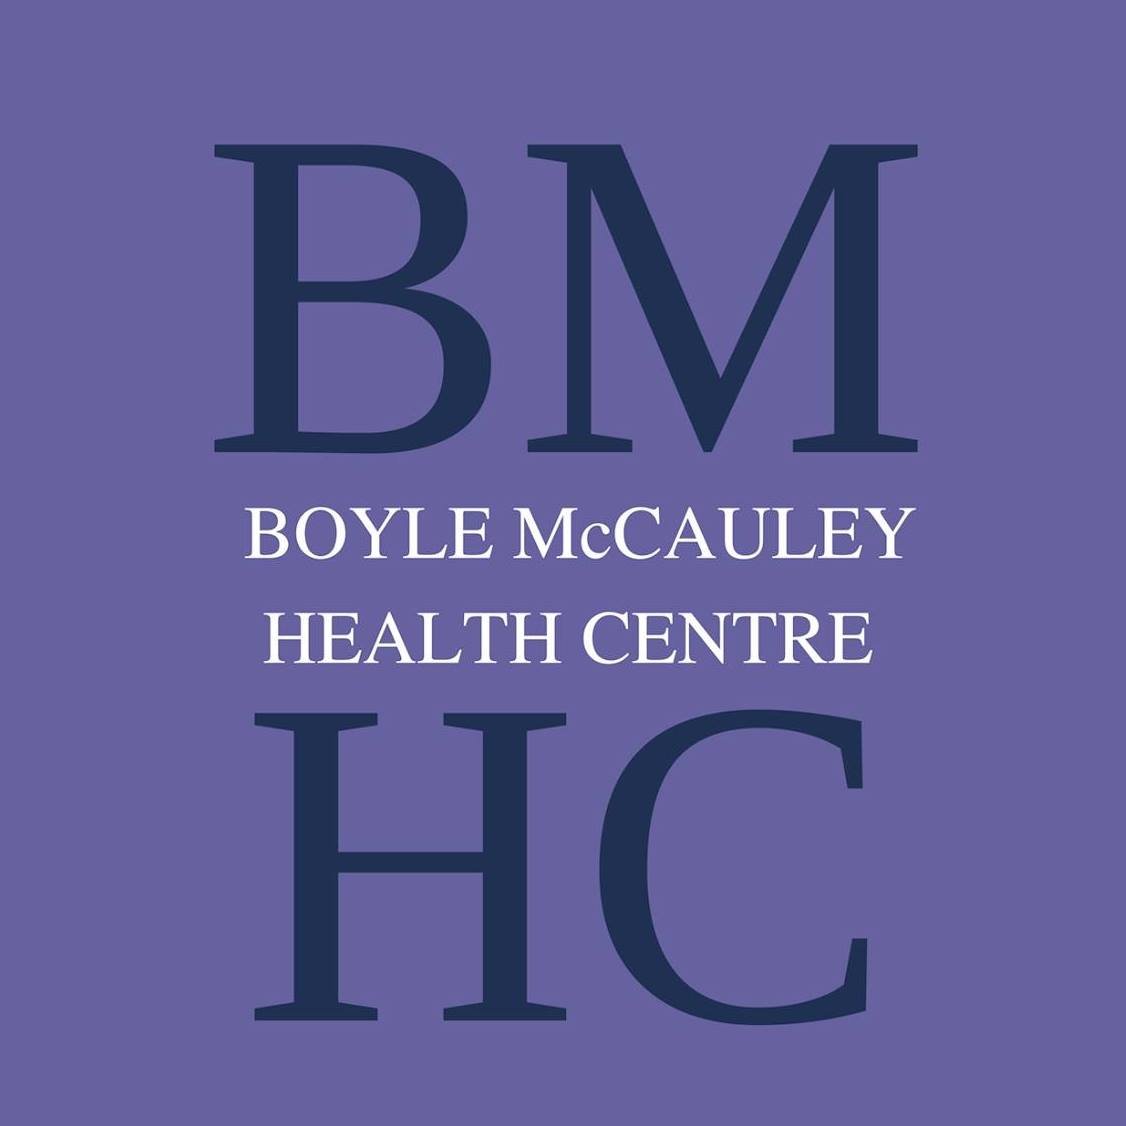 Boyle McCauley Health Centre